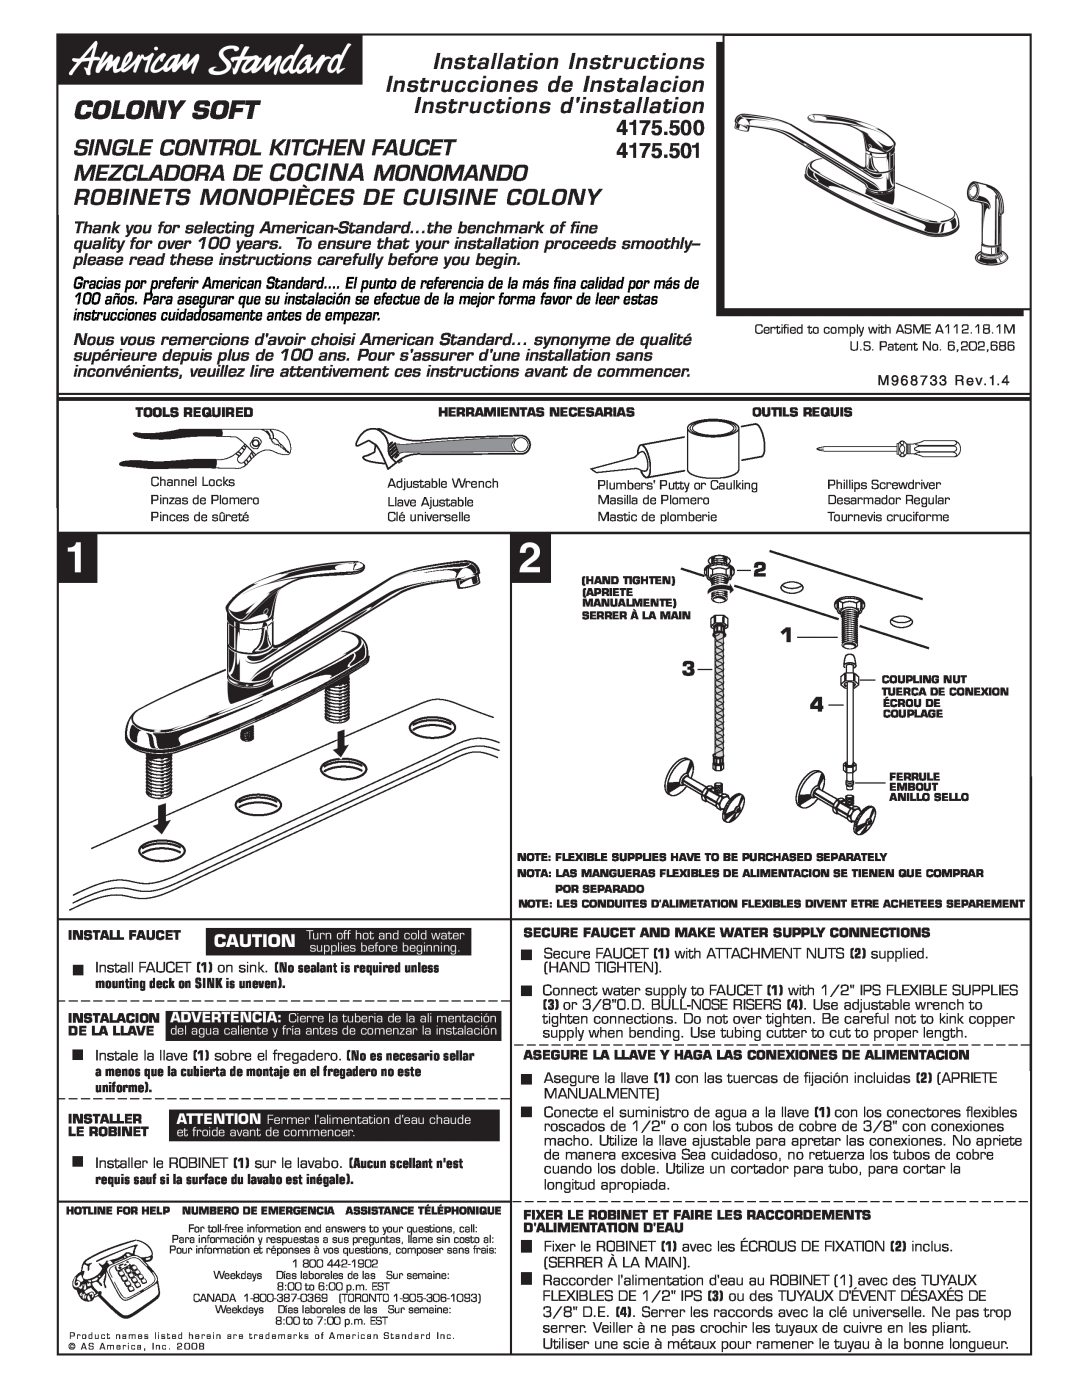 American Standard 4175.501 installation instructions Colony Soft, Installation Instructions, Instrucciones de Instalacion 